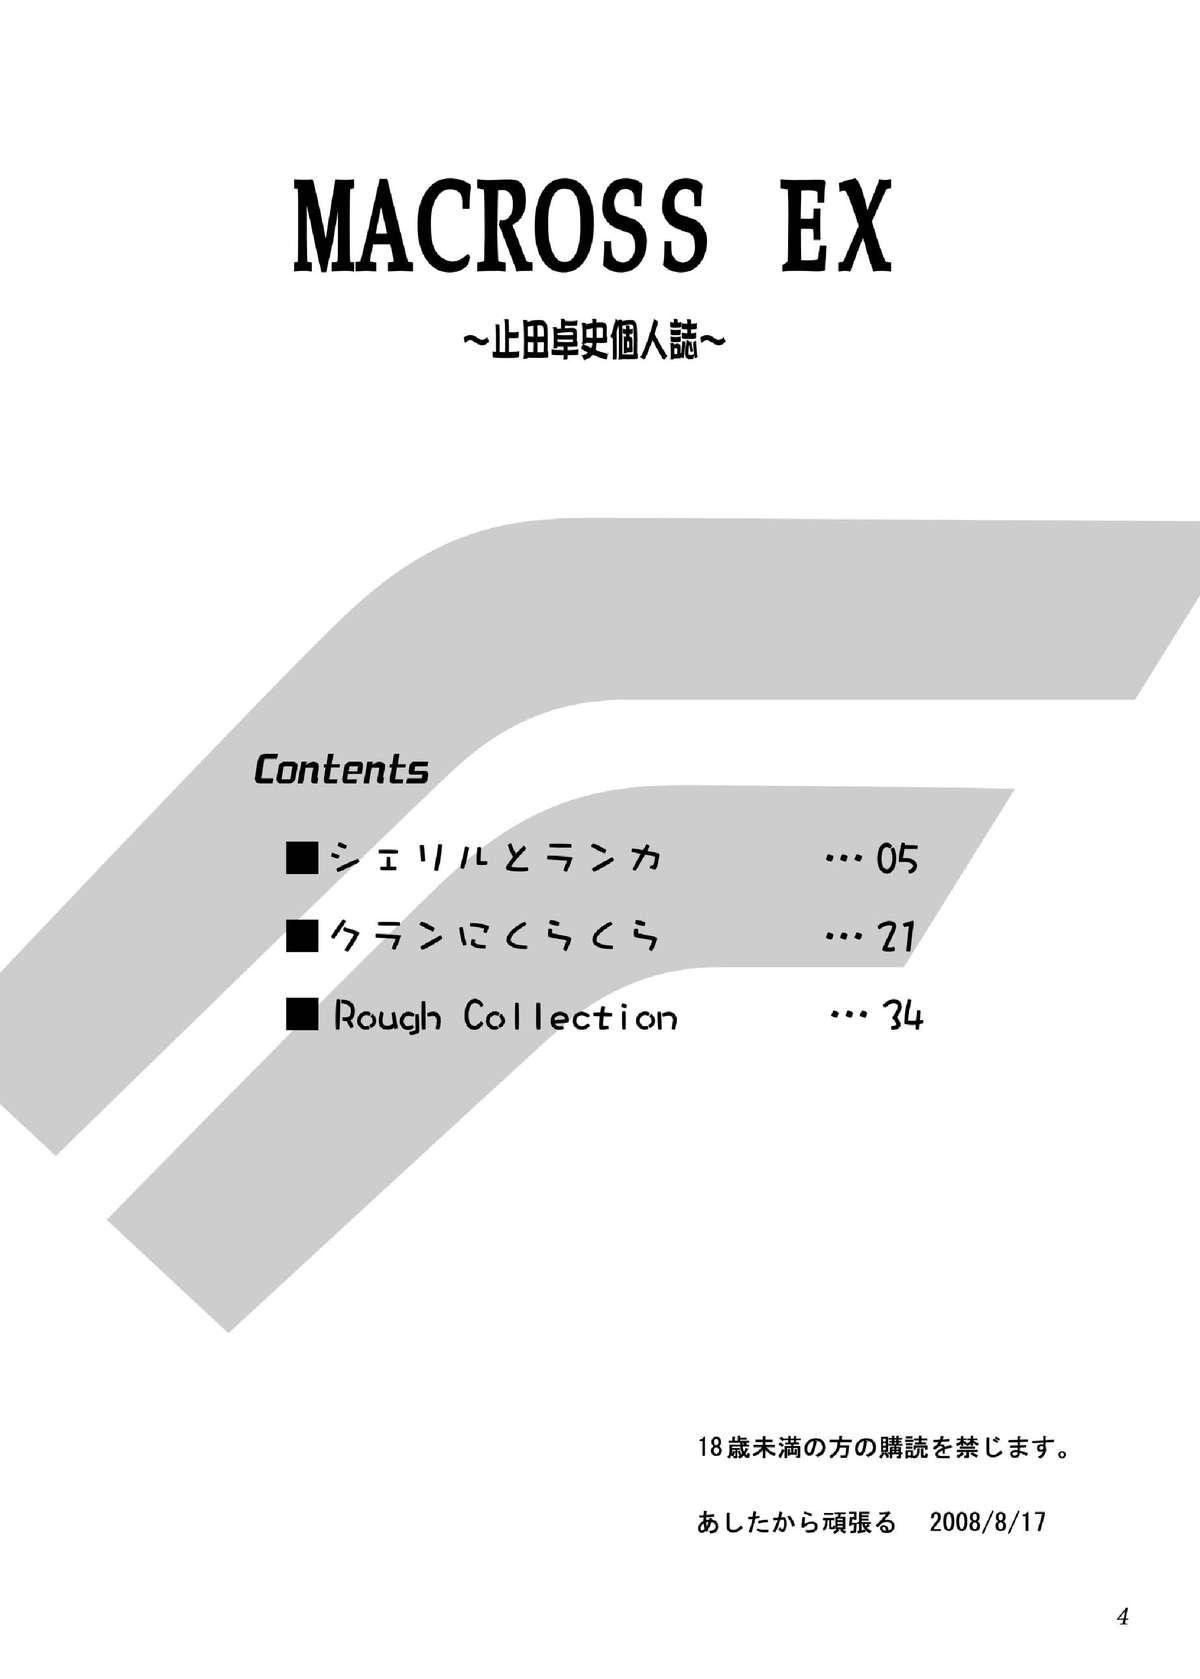 MACROSS EX 2